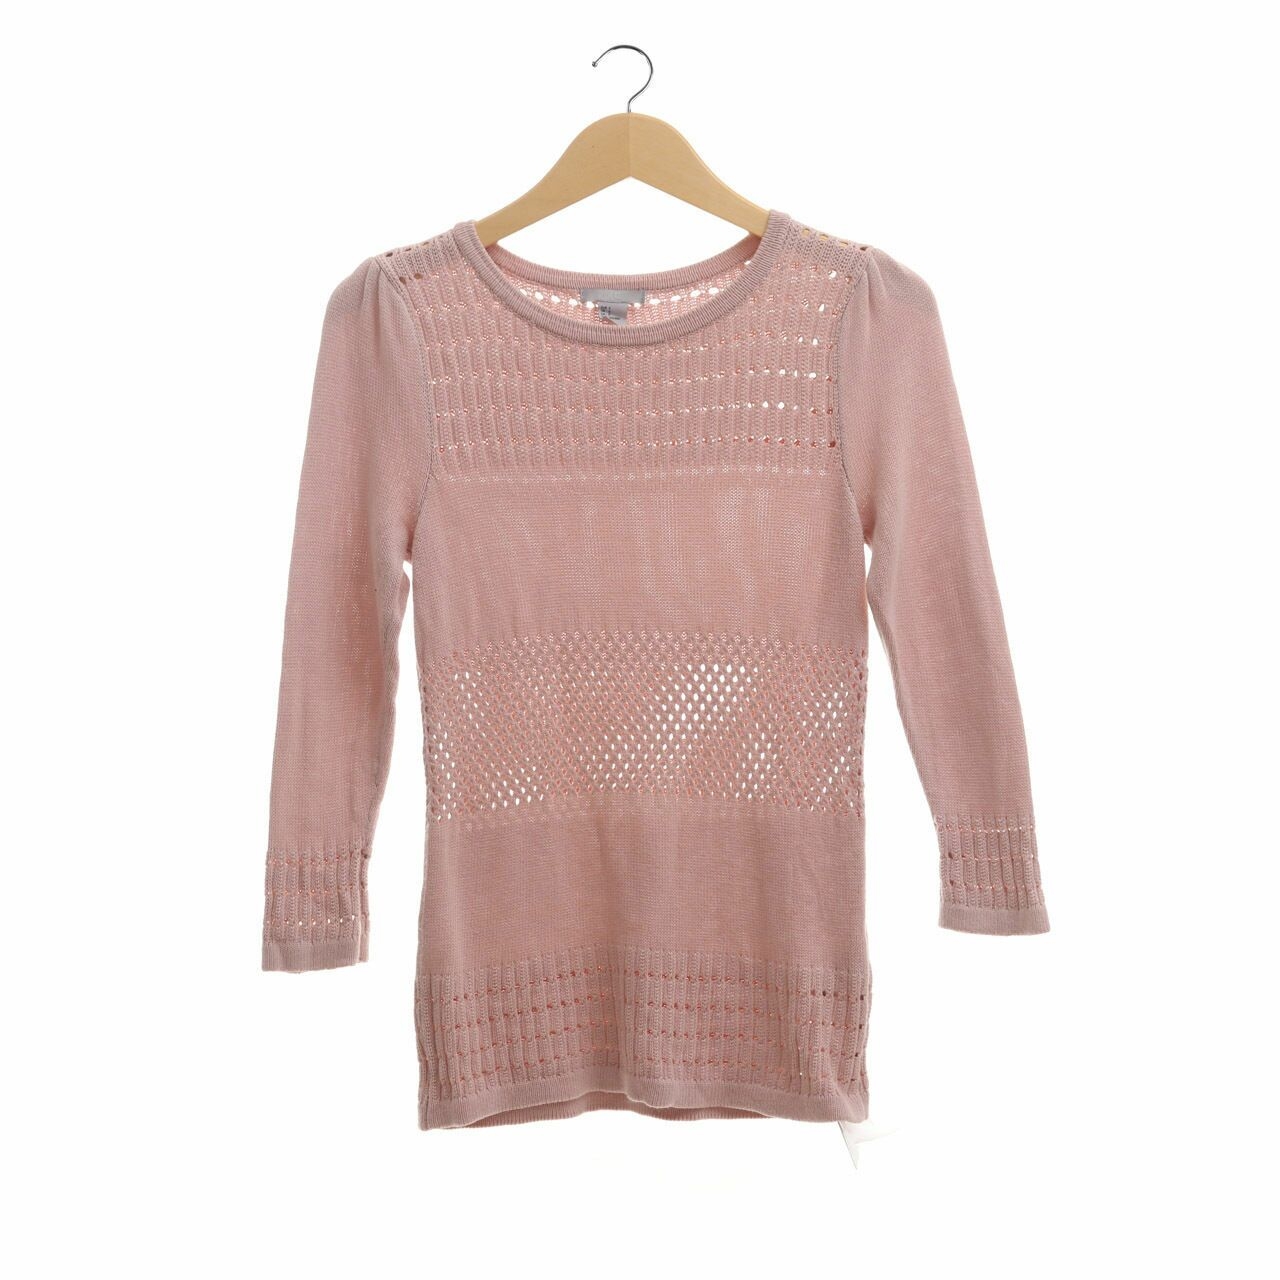 H&M Pink Knit Sweater